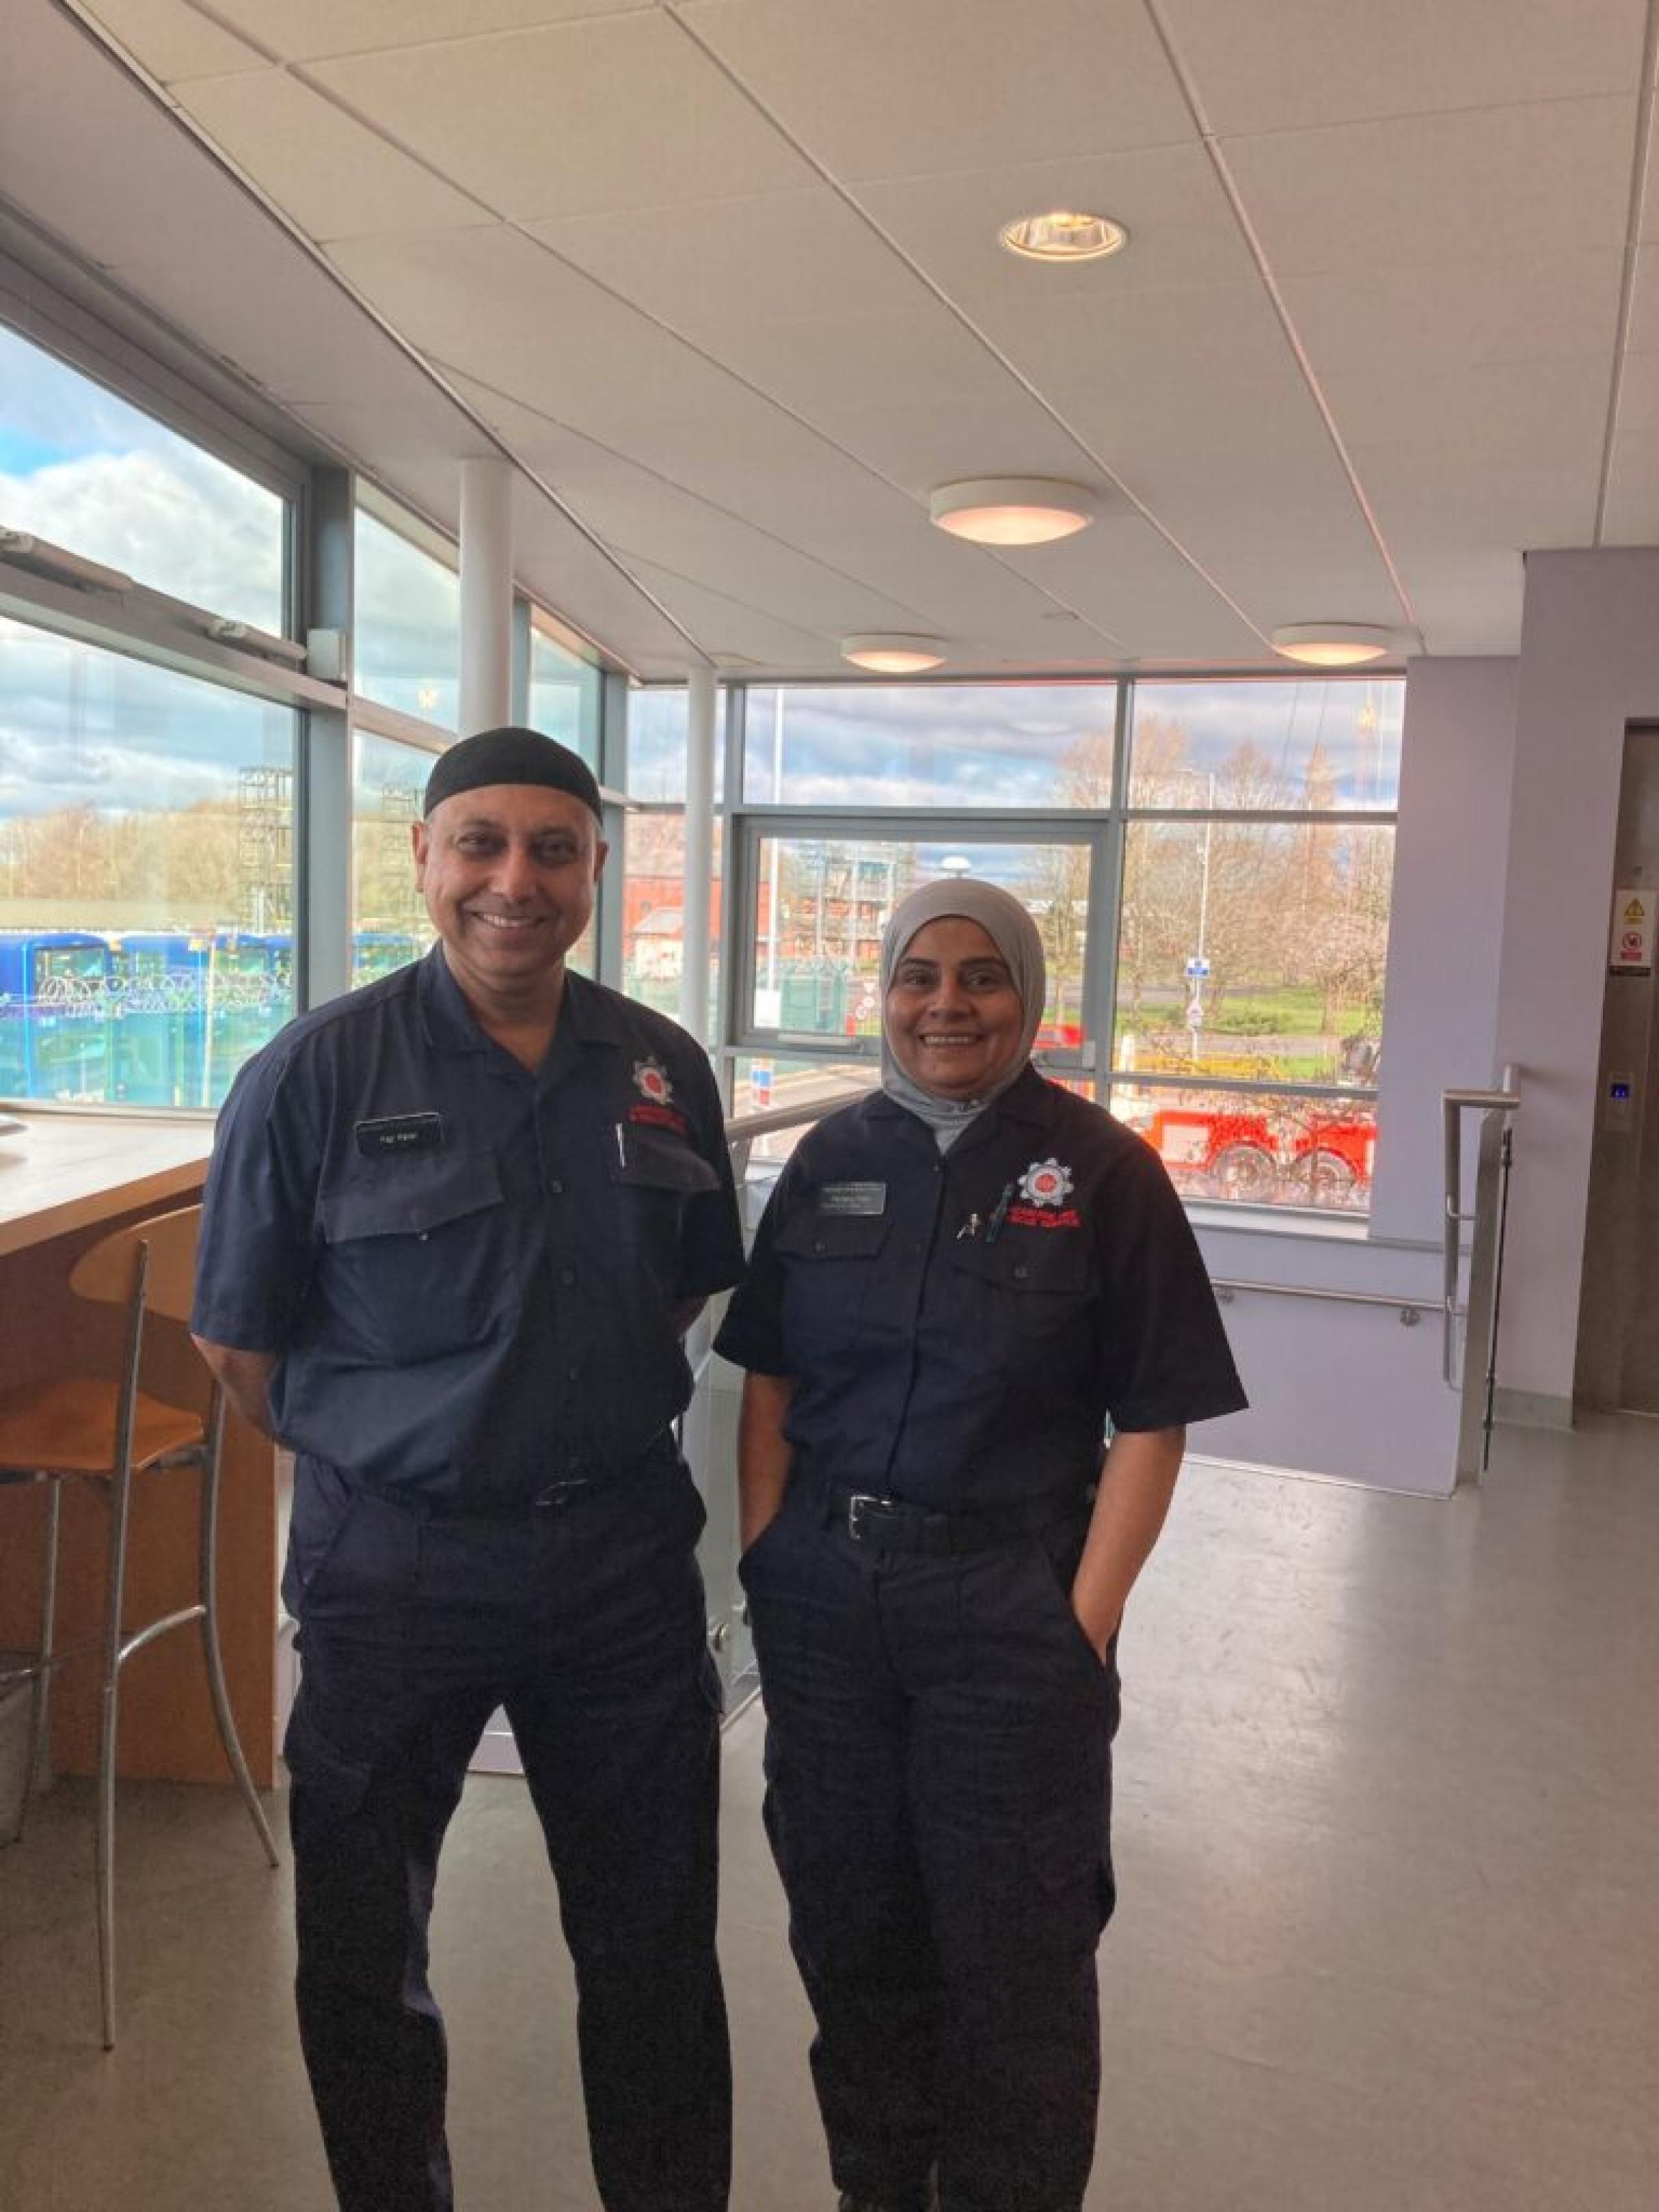 Faz & Farzana. Two officers from Lancashire Fire & Rescue